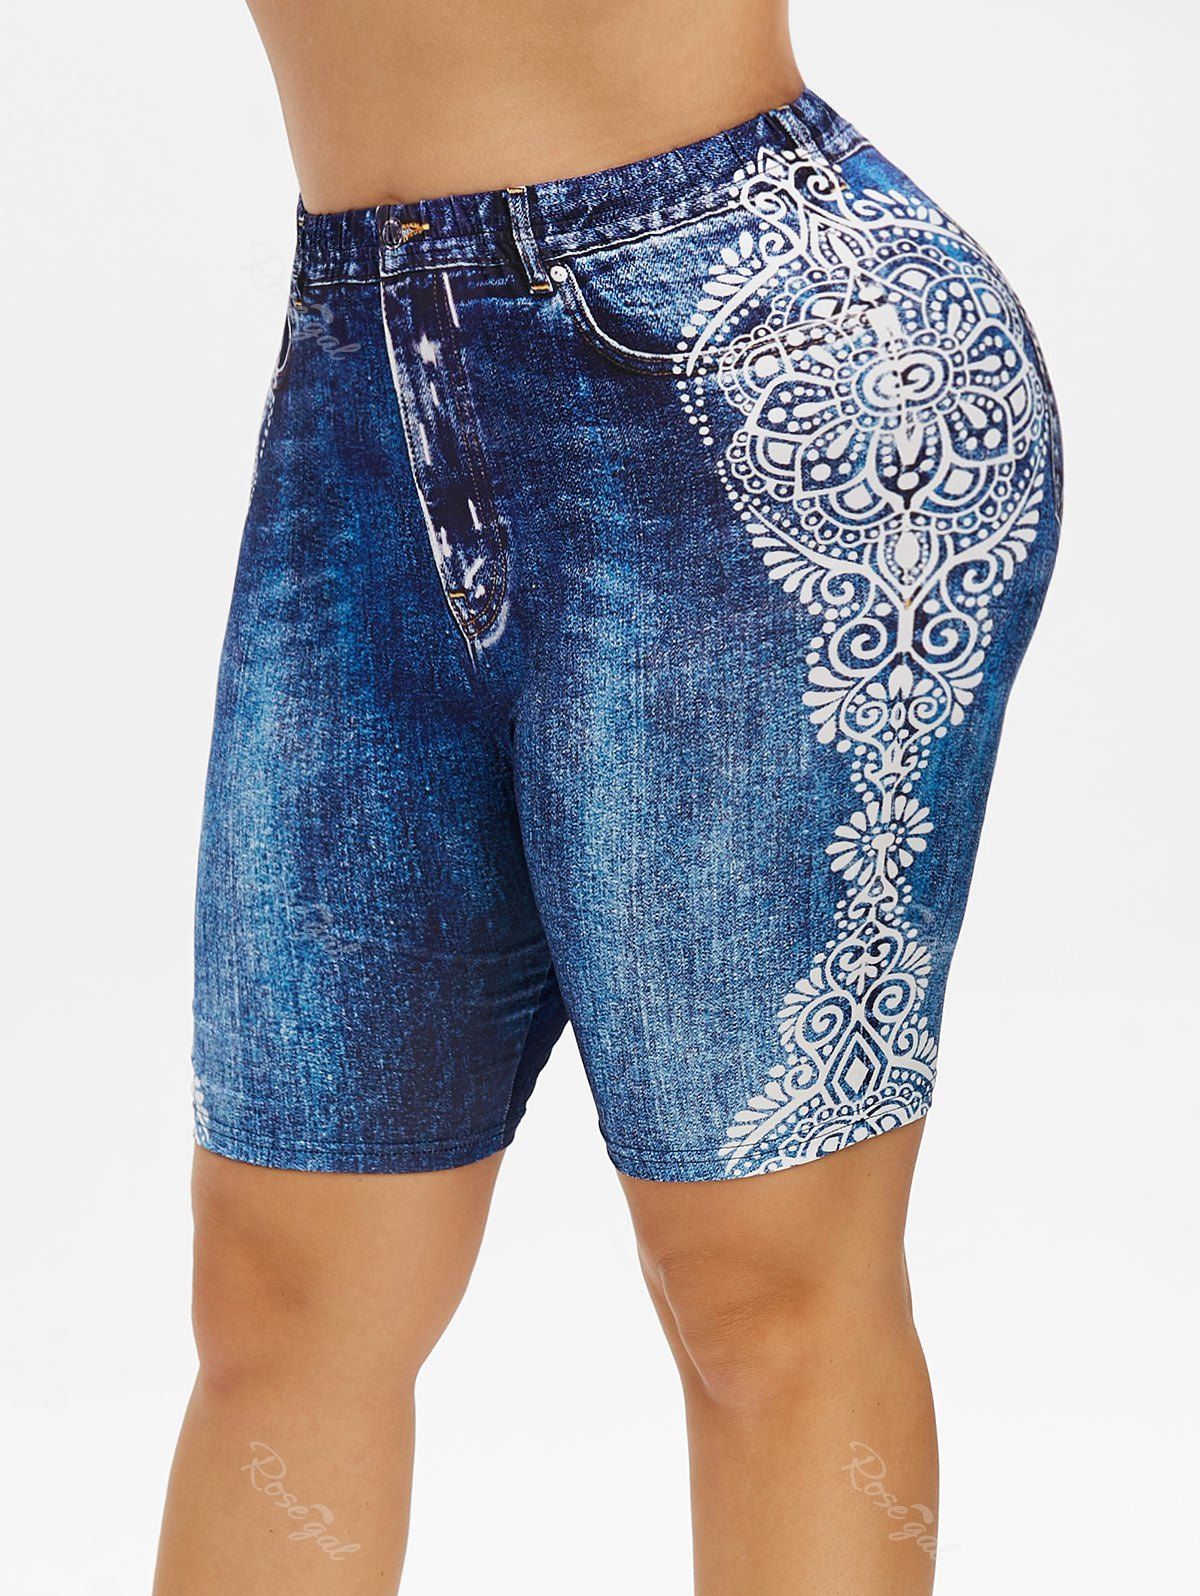 

Plus Size 3D Jean Print Tribal Shorts, Ocean blue